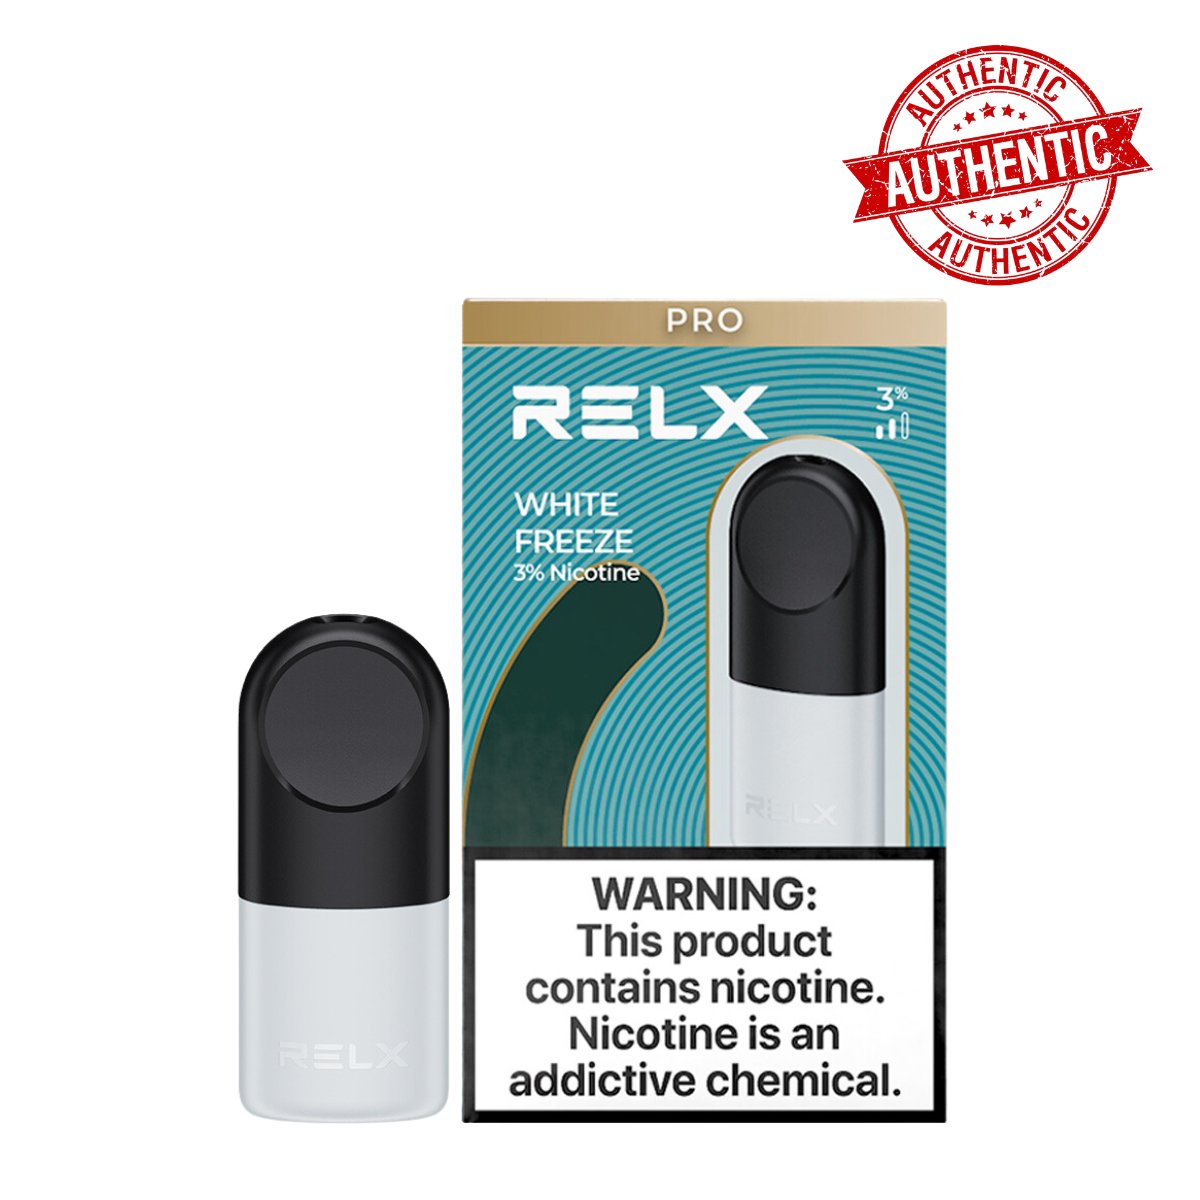 RELX Infinity Pro Single Pod - White Freeze